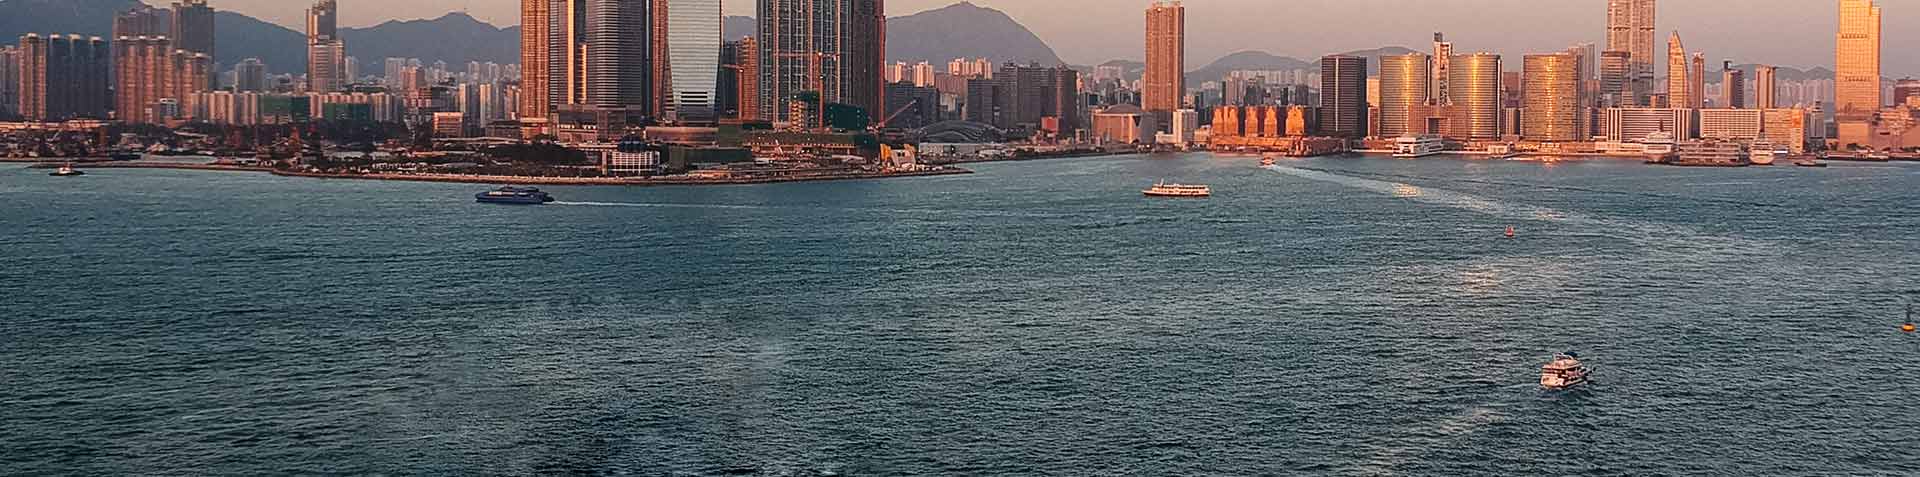 Trade Agreements  Brand Hong Kong - Asia's World City